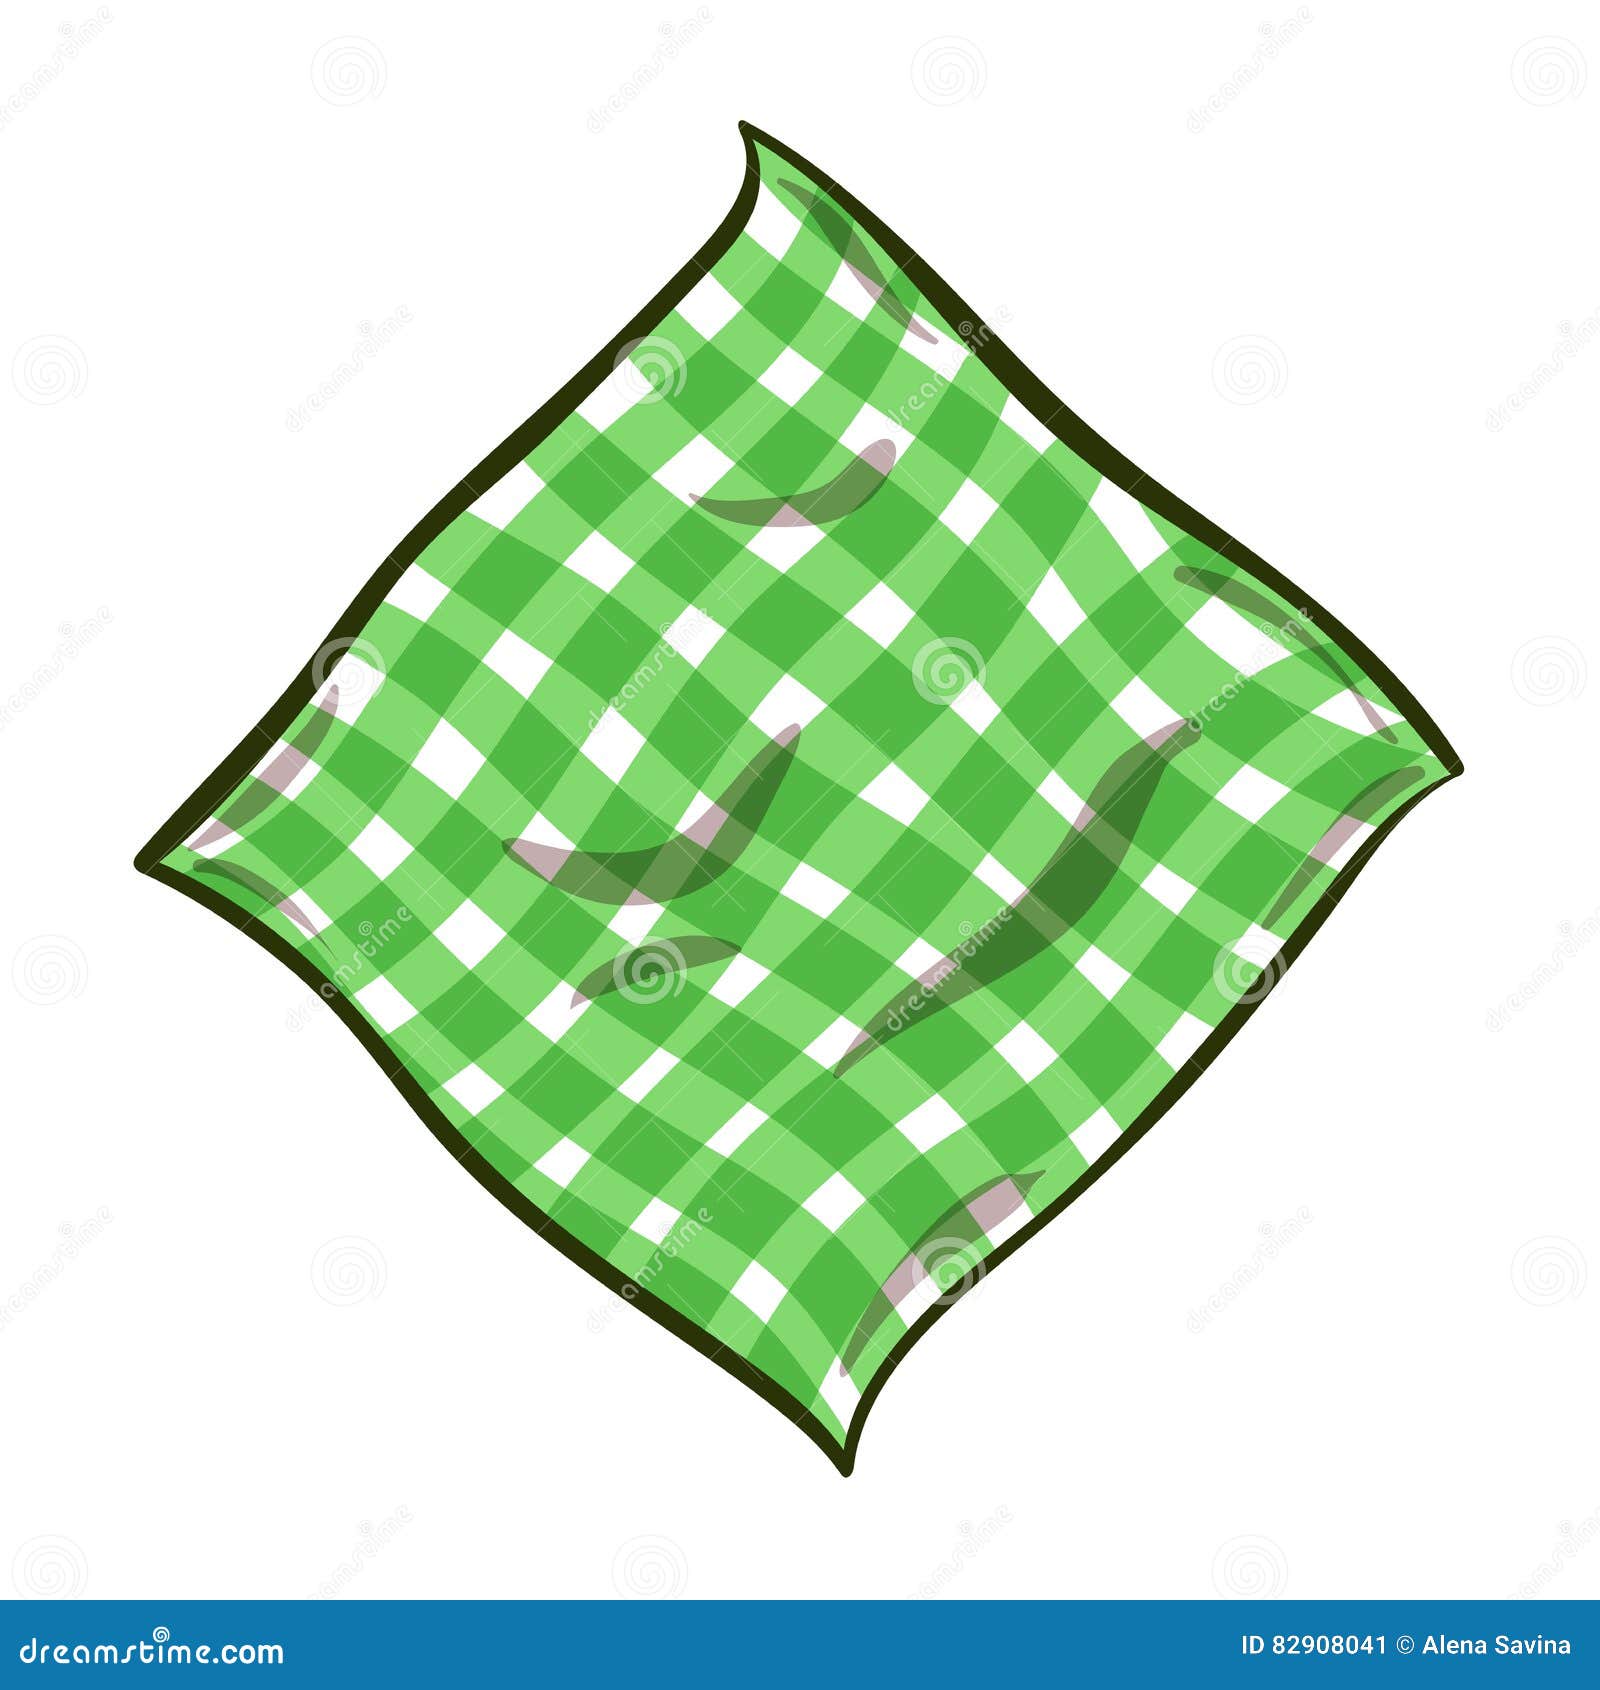 cartoon striped napkin